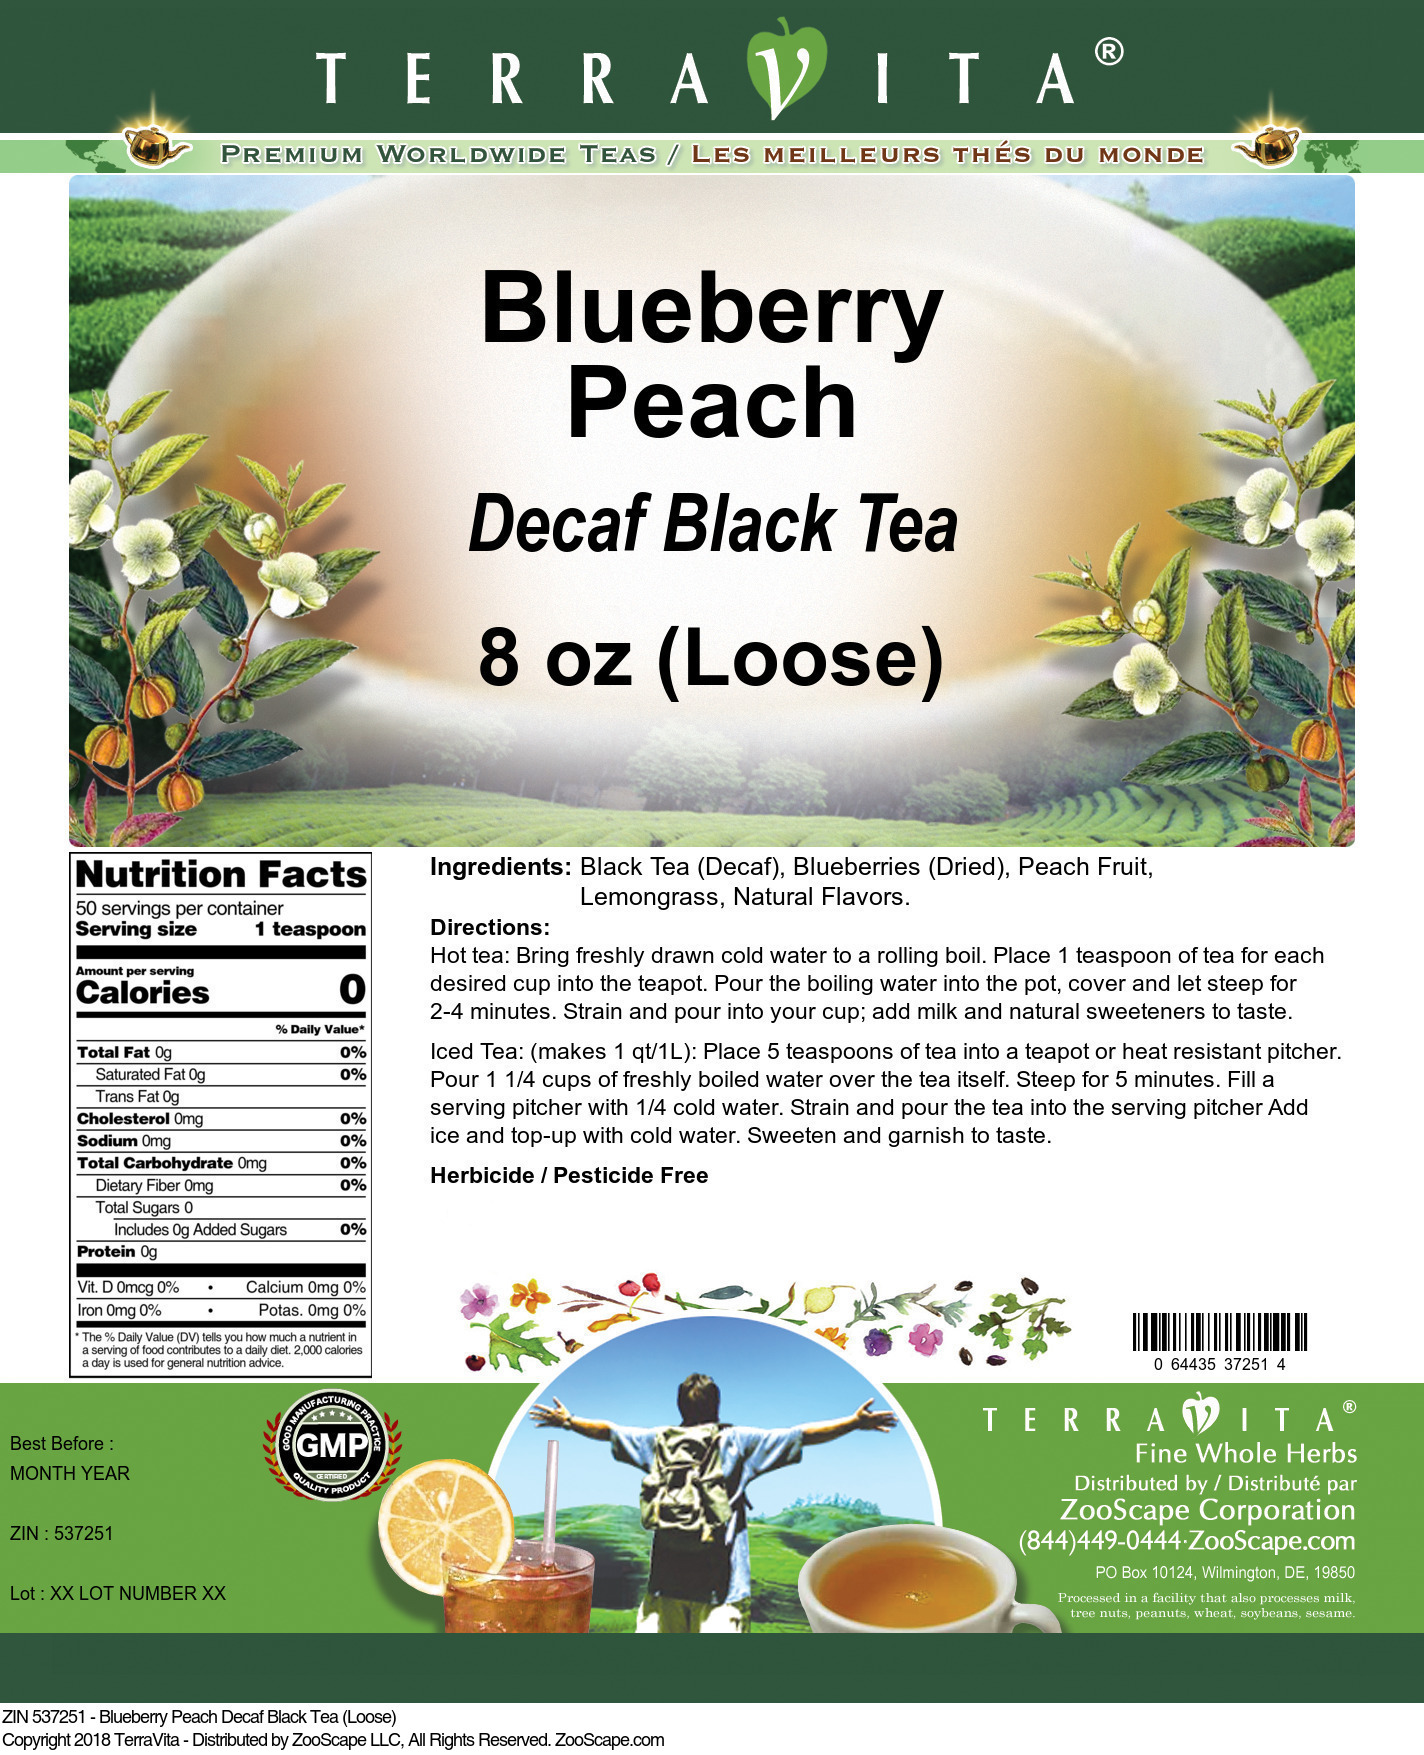 Blueberry Peach Decaf Black Tea (Loose) - Label